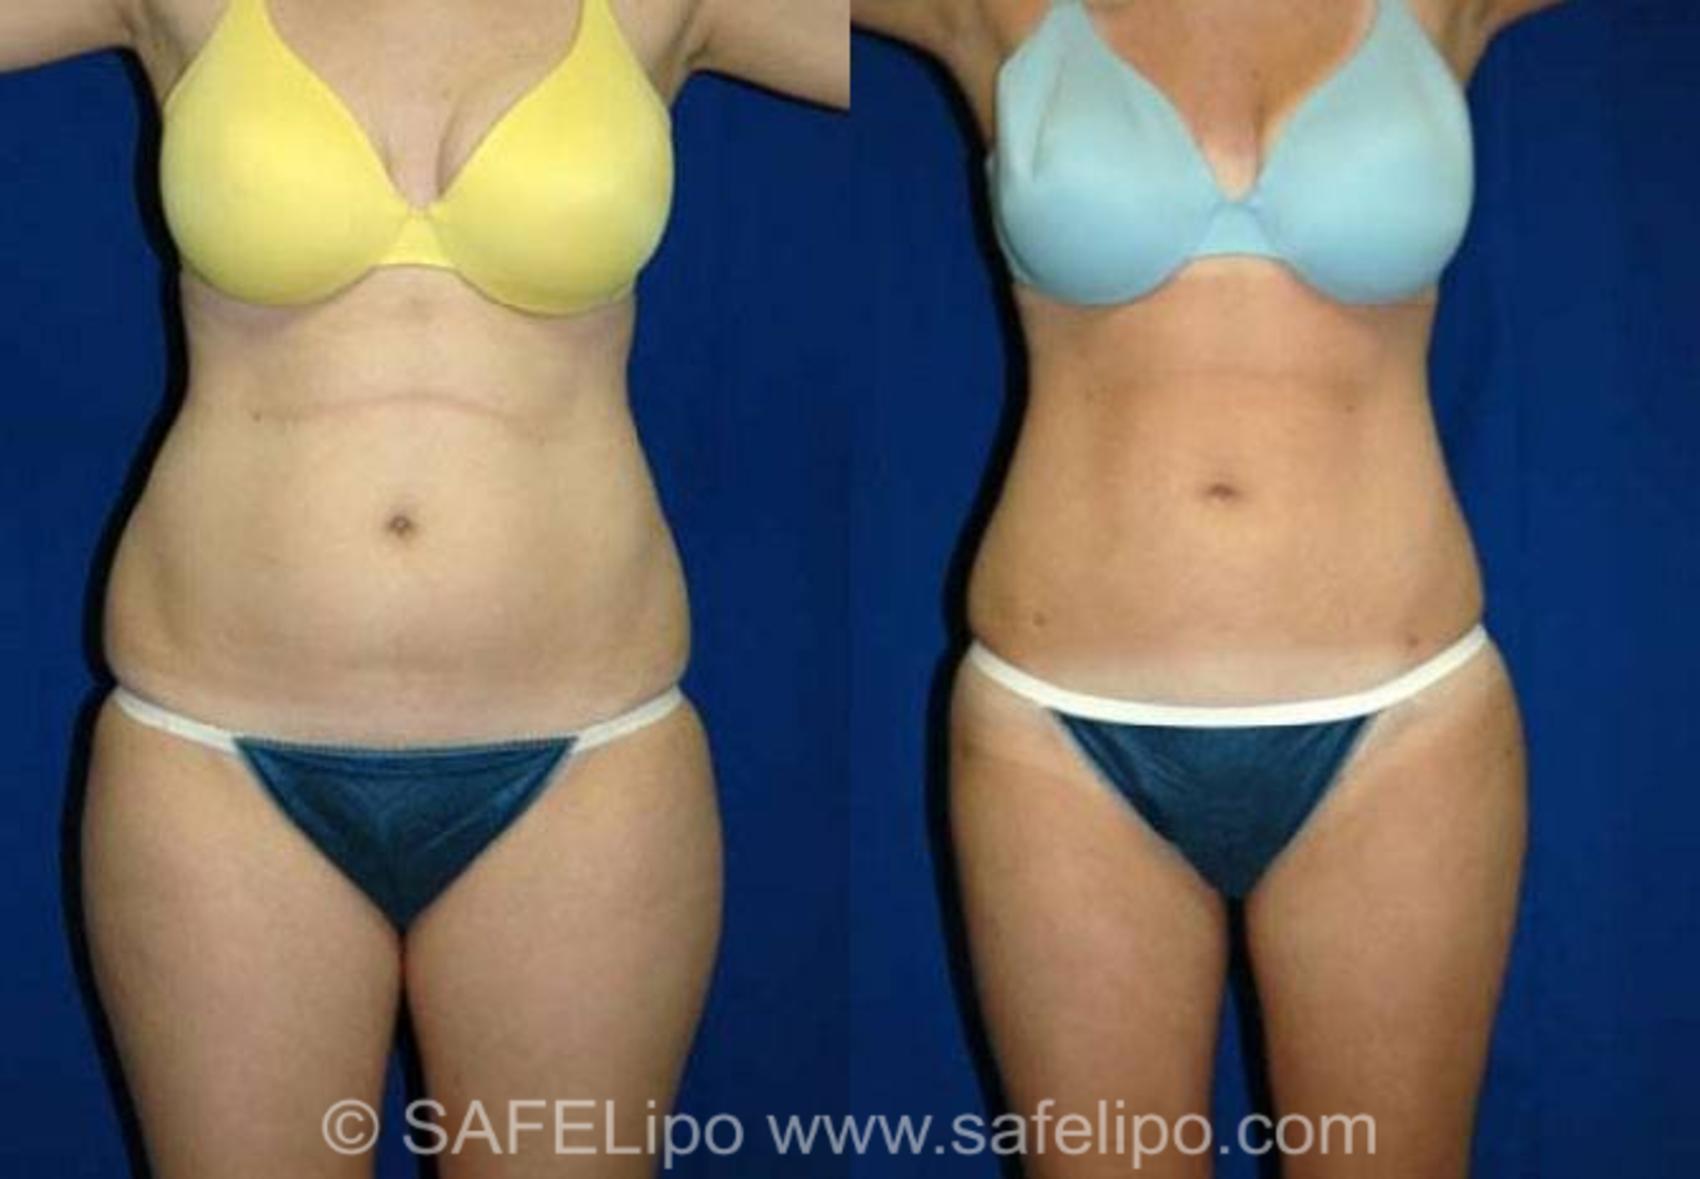 SAFELipoHD® Case 141 Before & After View #1 | SAFELipo®